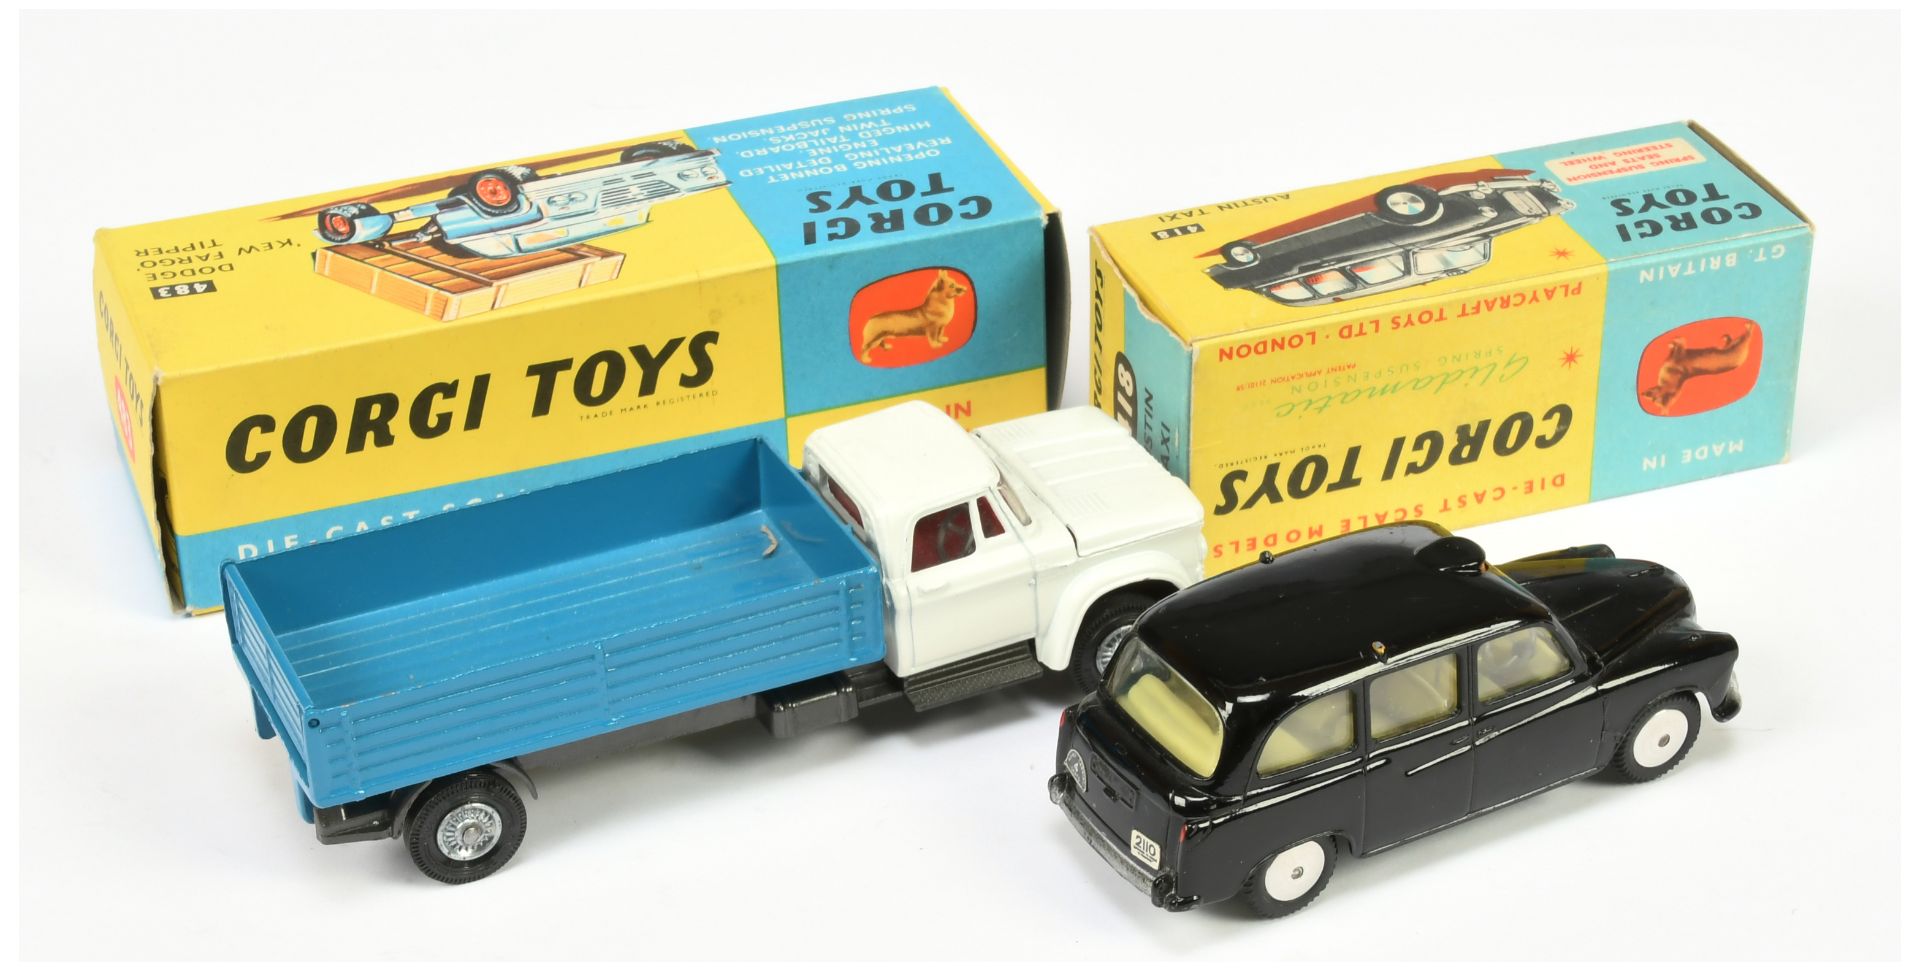 Corgi Toys 483 Dodge Kew Fargo Tipper - White cab, blue tipper, graphite grey chassis, red interi... - Image 2 of 2